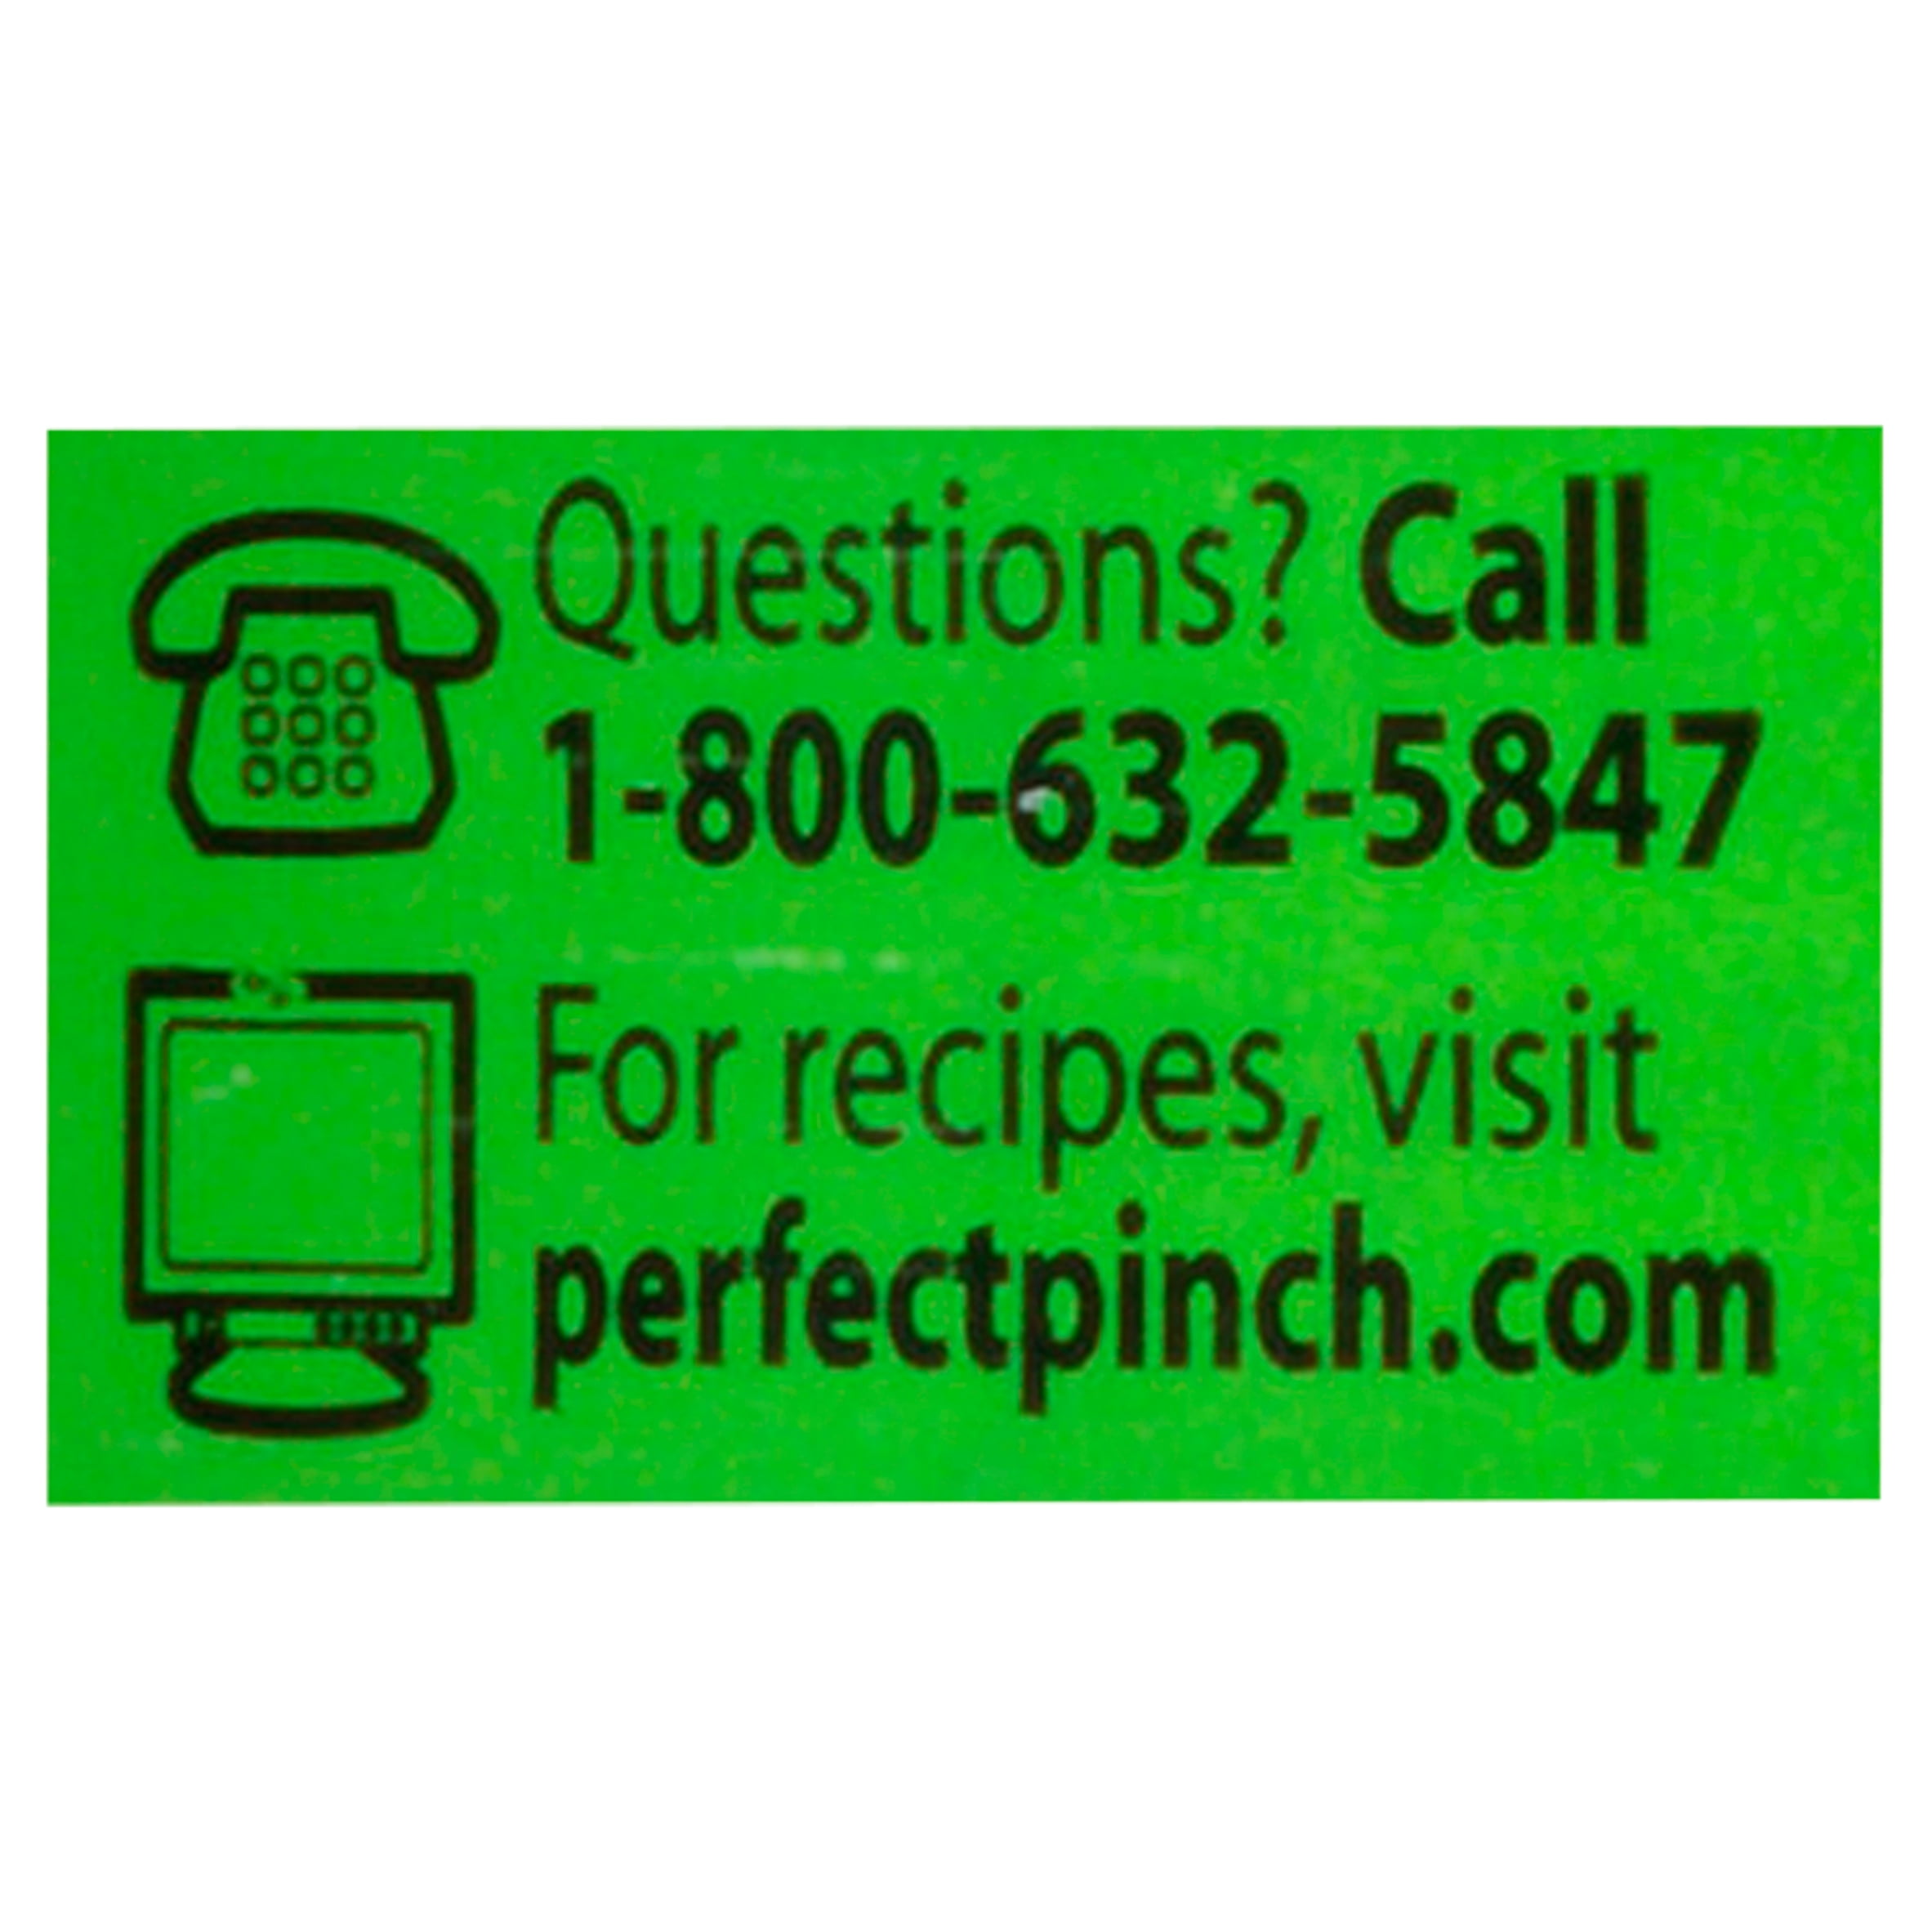 McCormick Perfect Pinch Salad Supreme Seasoning, 10.75 oz